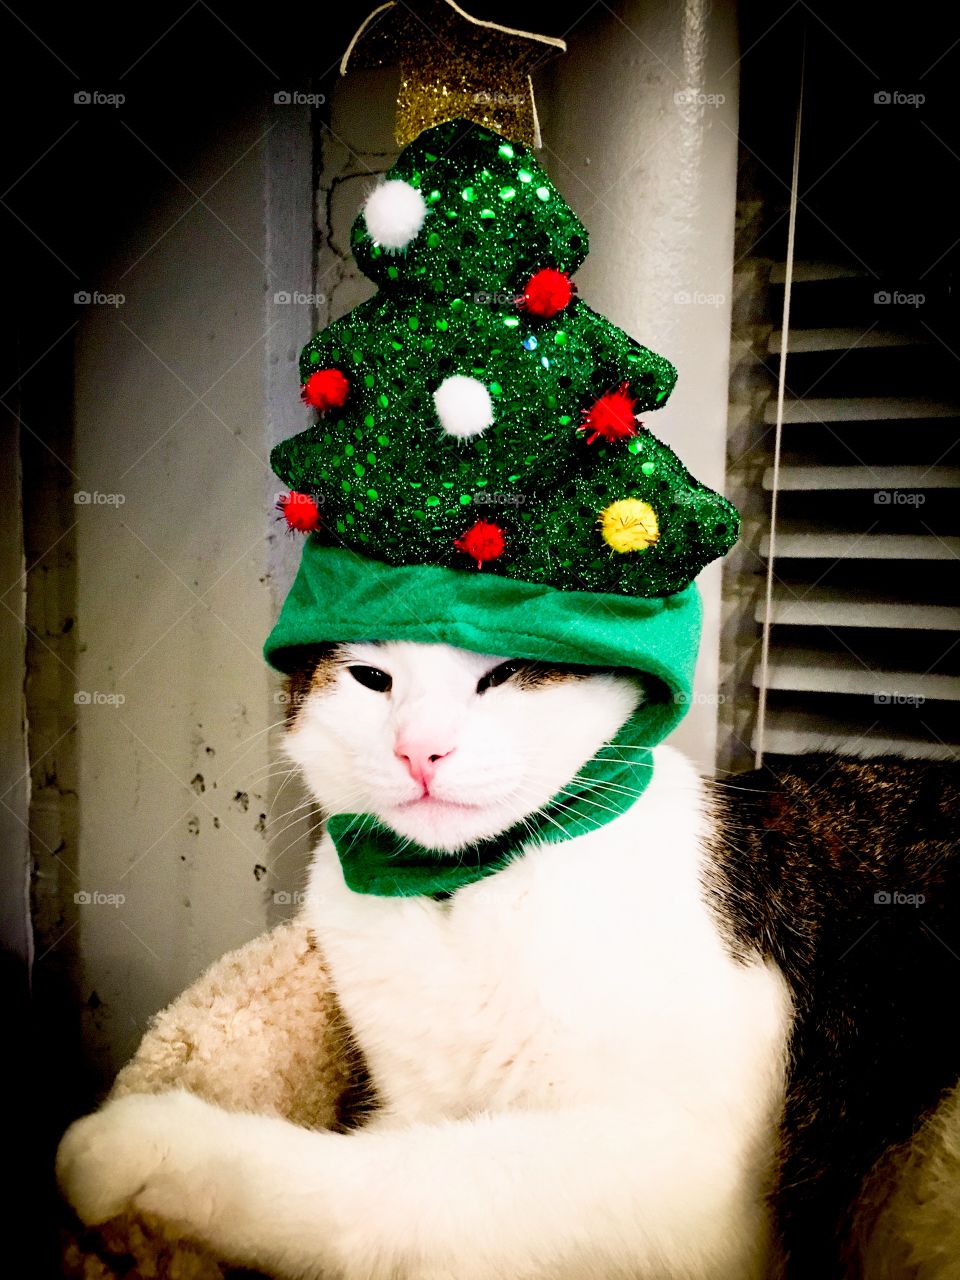 Kitty cat wearing Christmas hat